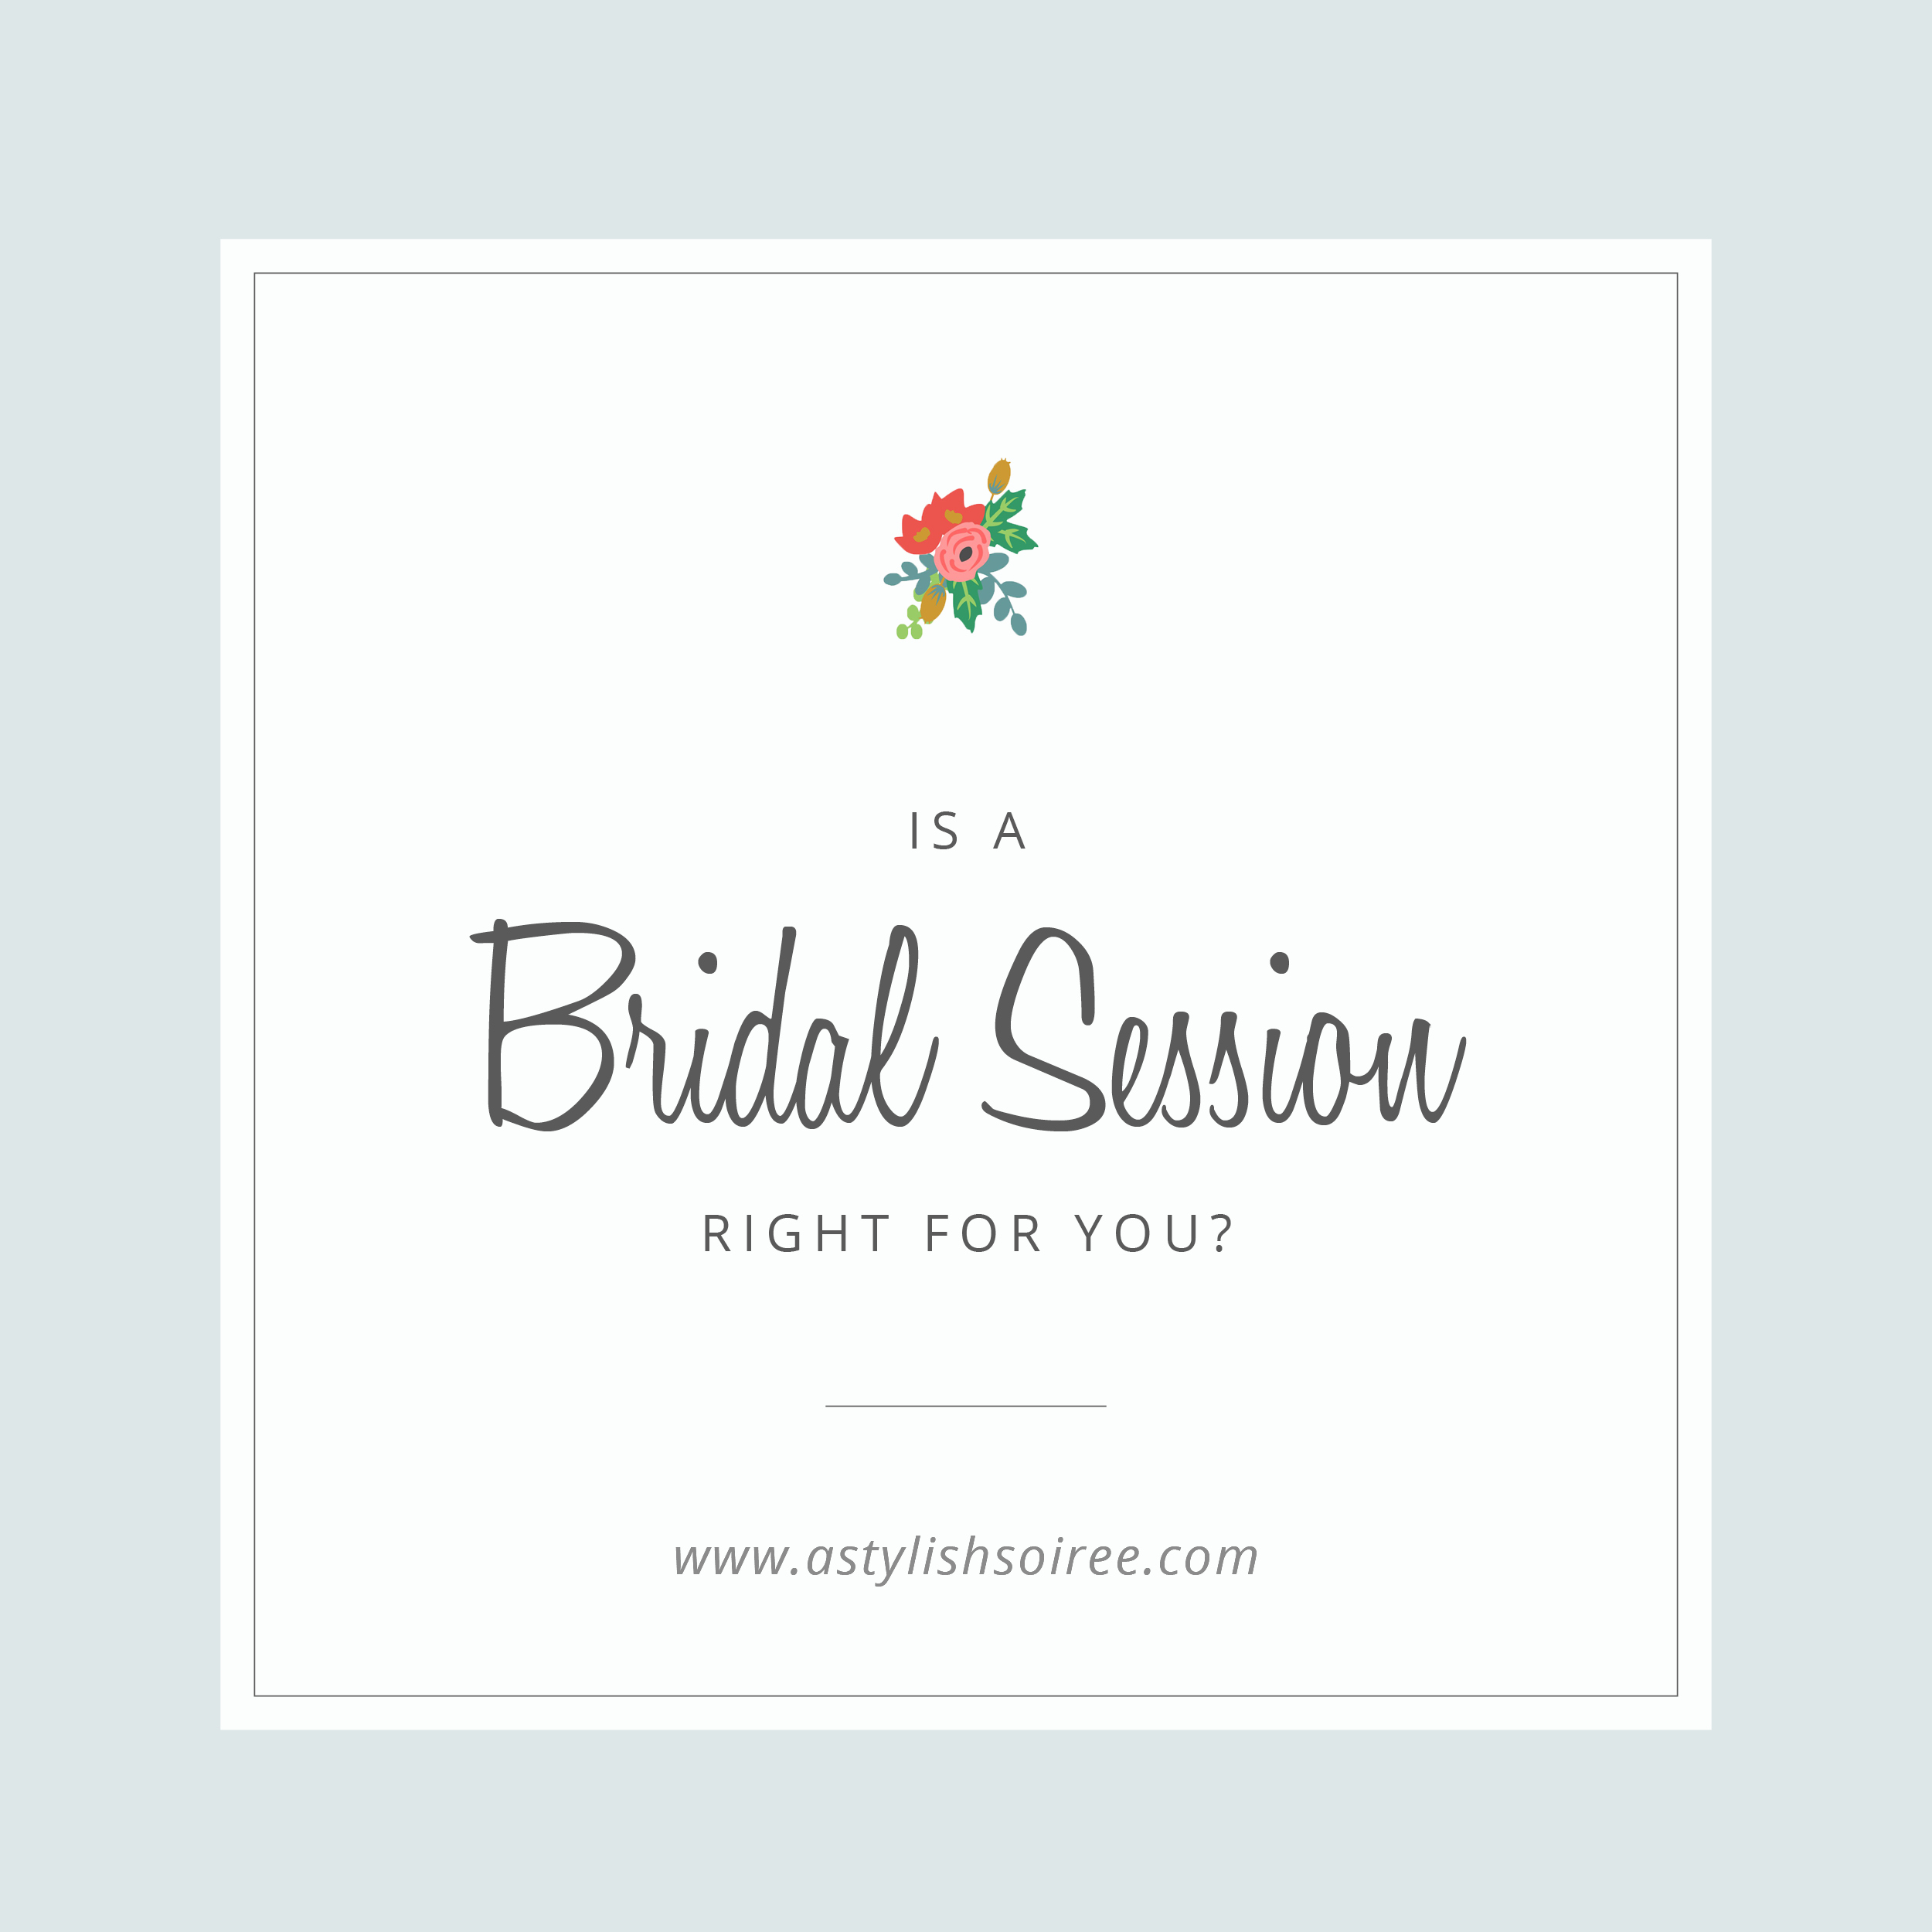 Bridal Session - A Stylish Soiree Dallas